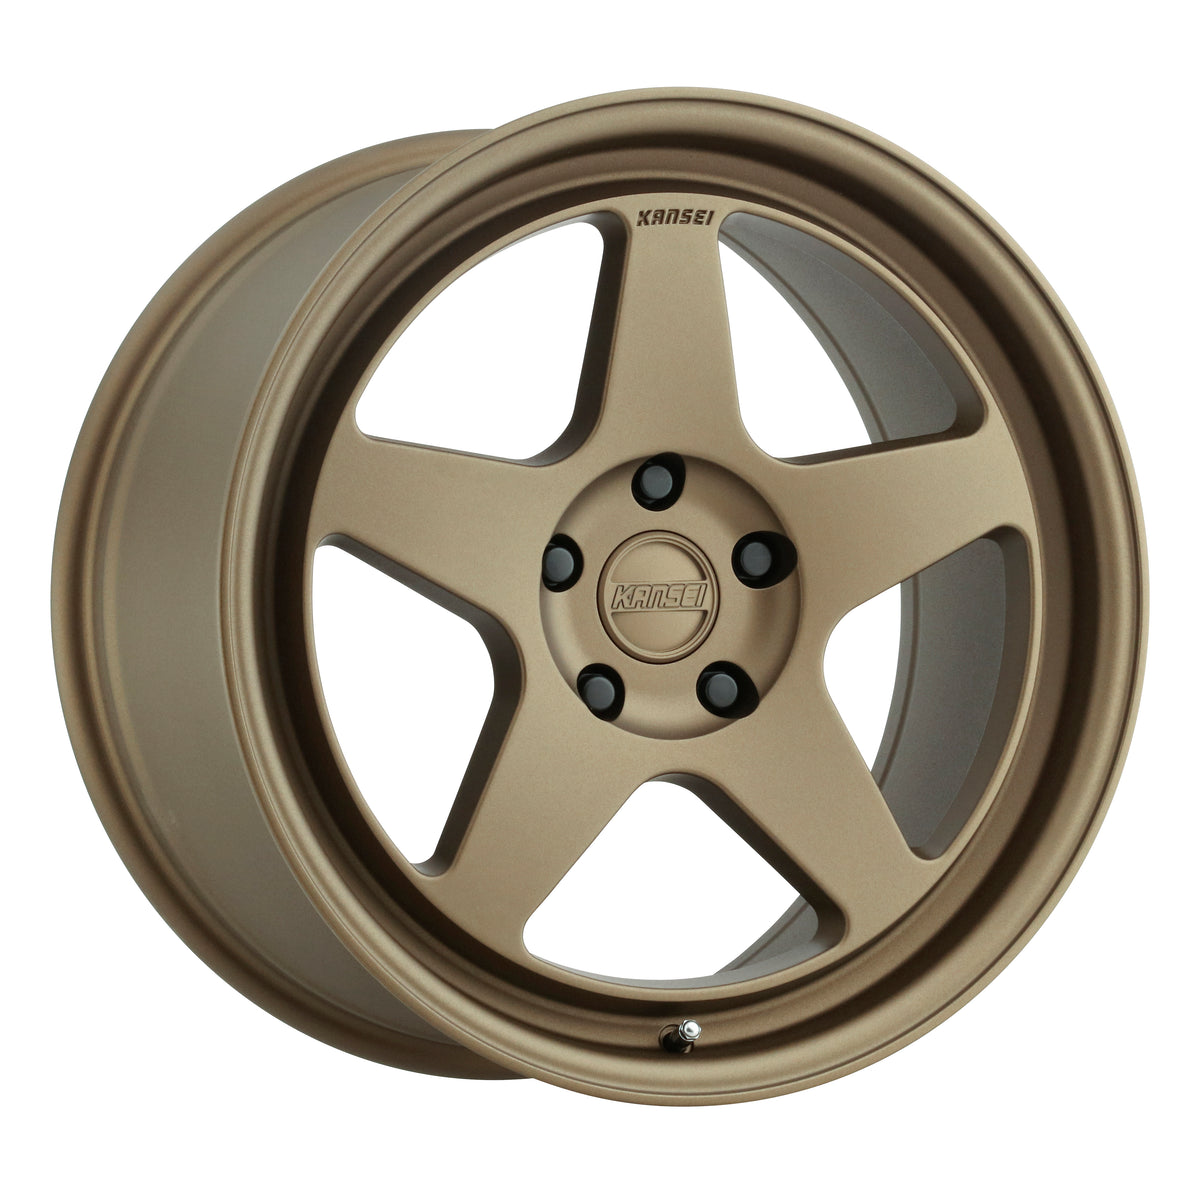 K12B KNP Wheel, Size: 18" x 9", Bolt Pattern: 5 x 120 mm, Backspace: 6.38" [Finish: Bronze]